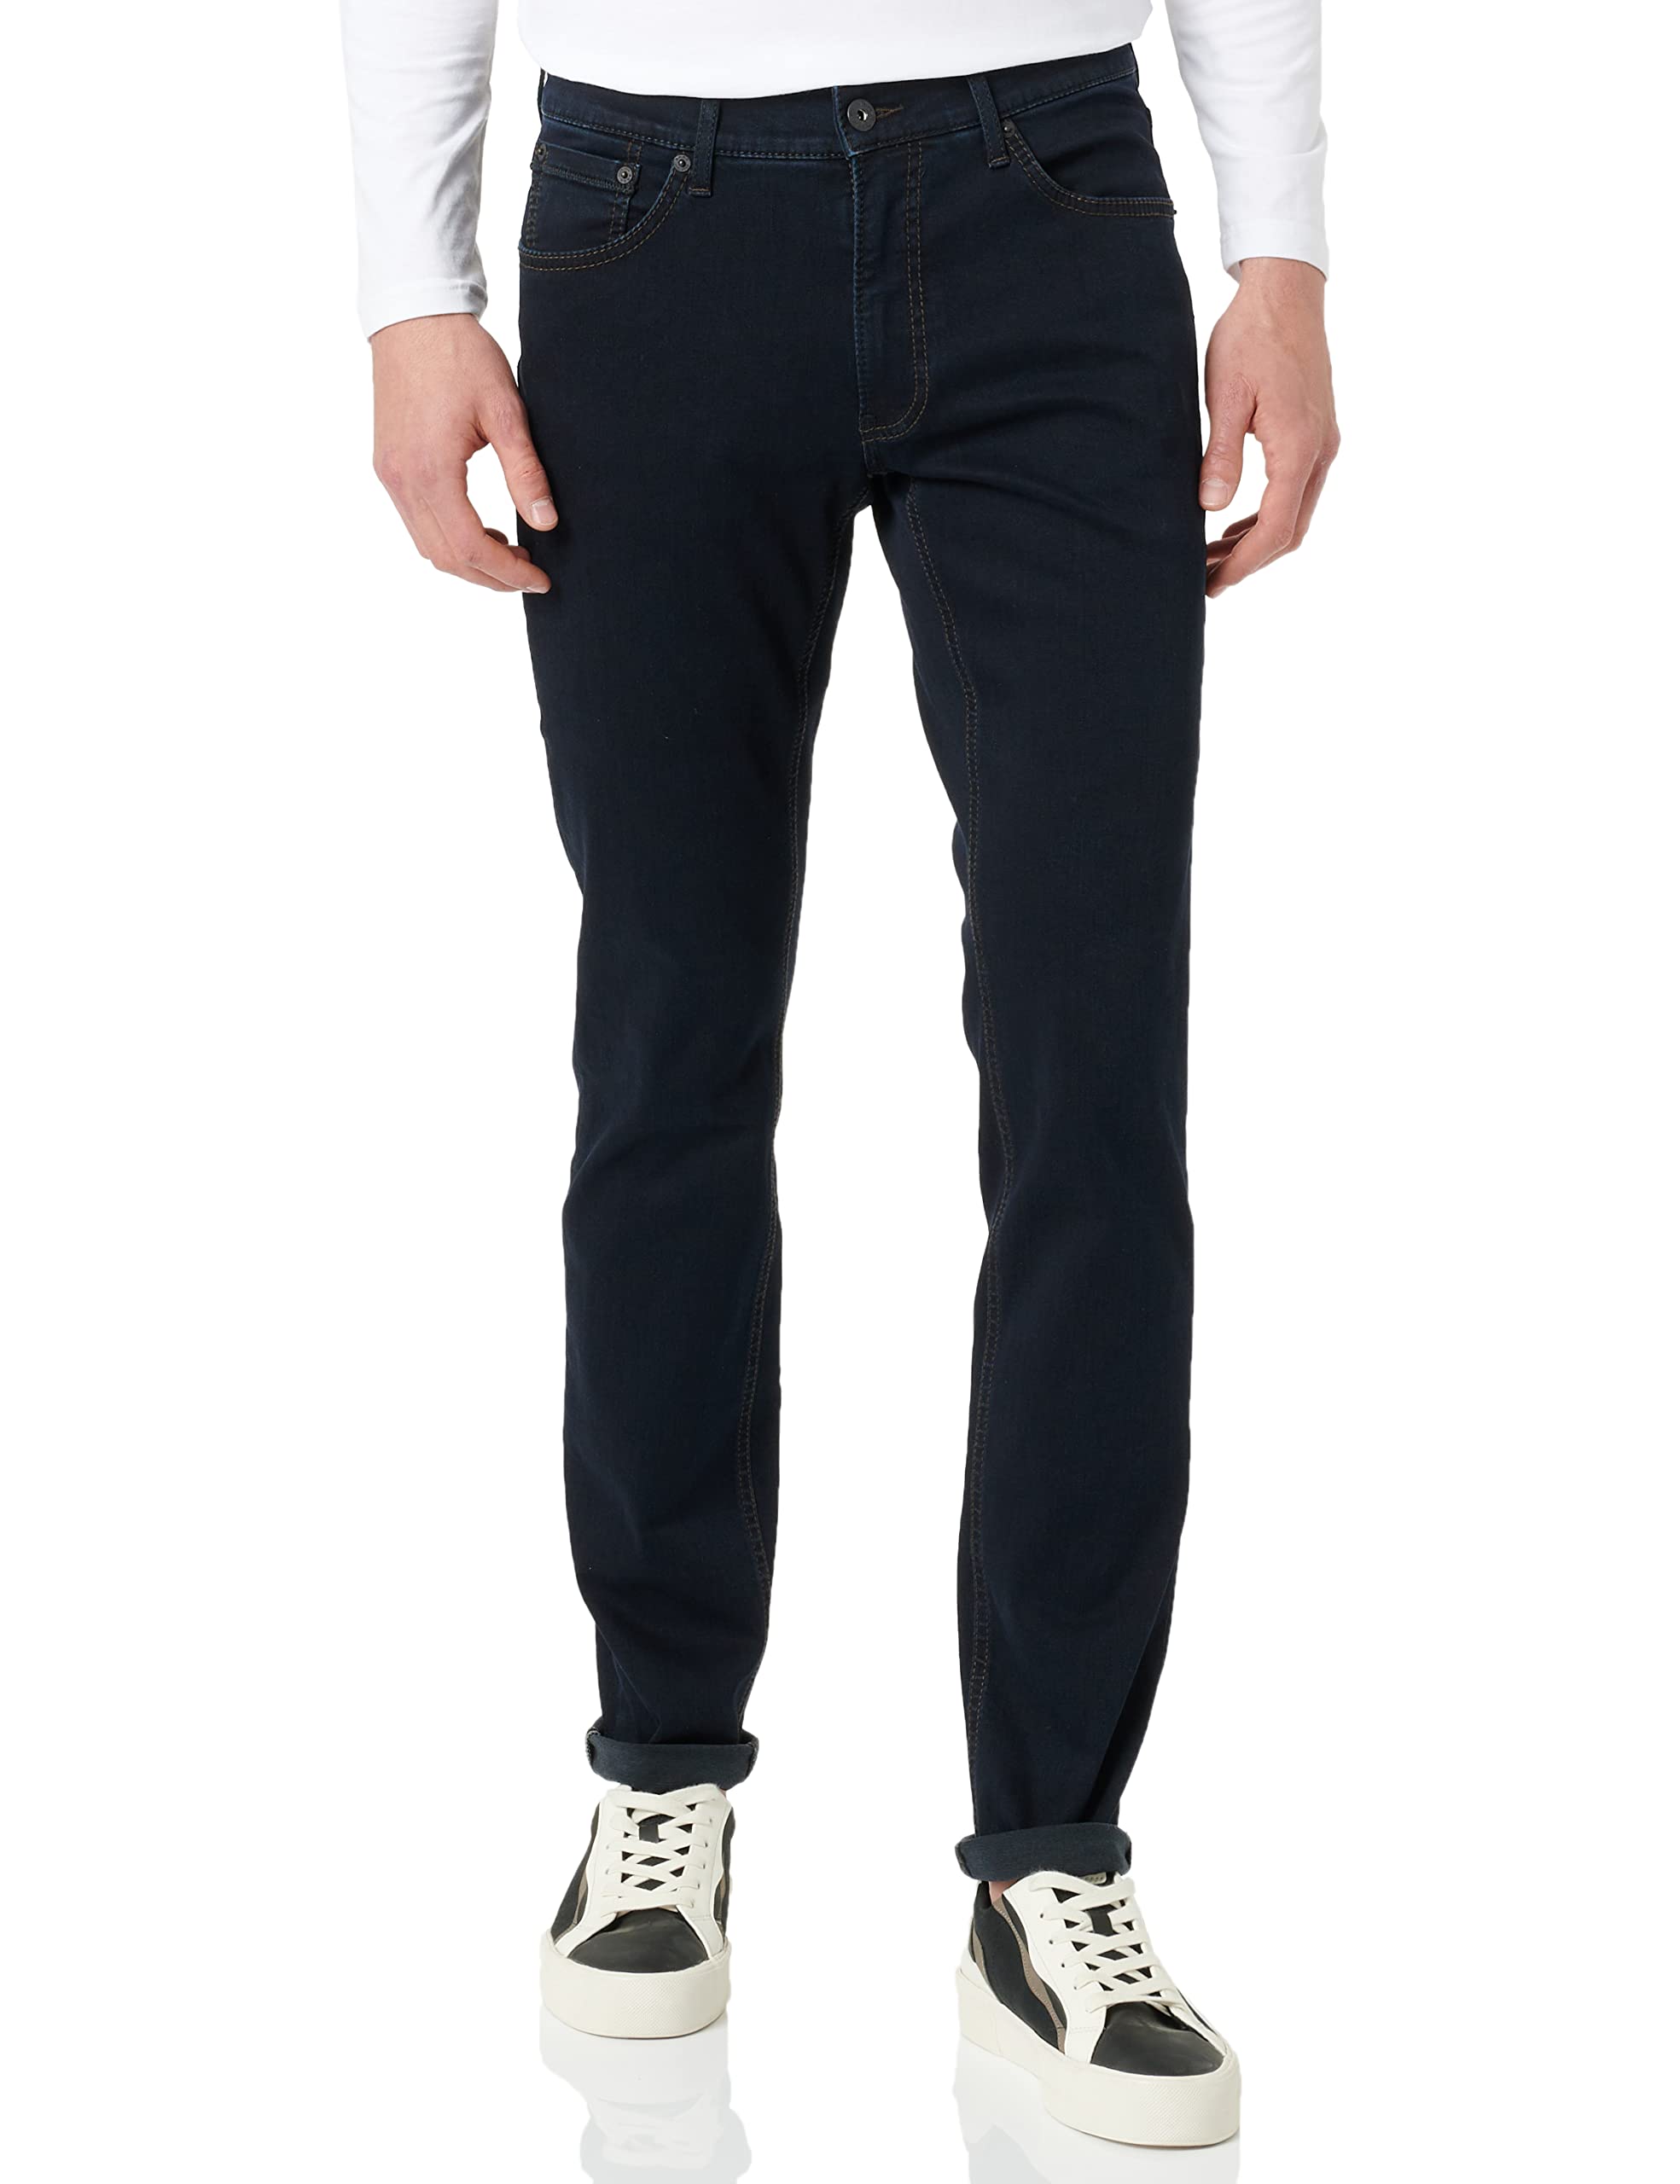 BRAX Herren Slim Fit Jeans Hose Style Chuck Hi-Flex Stretch Baumwolle, RAW BLUE, 32W / 36L